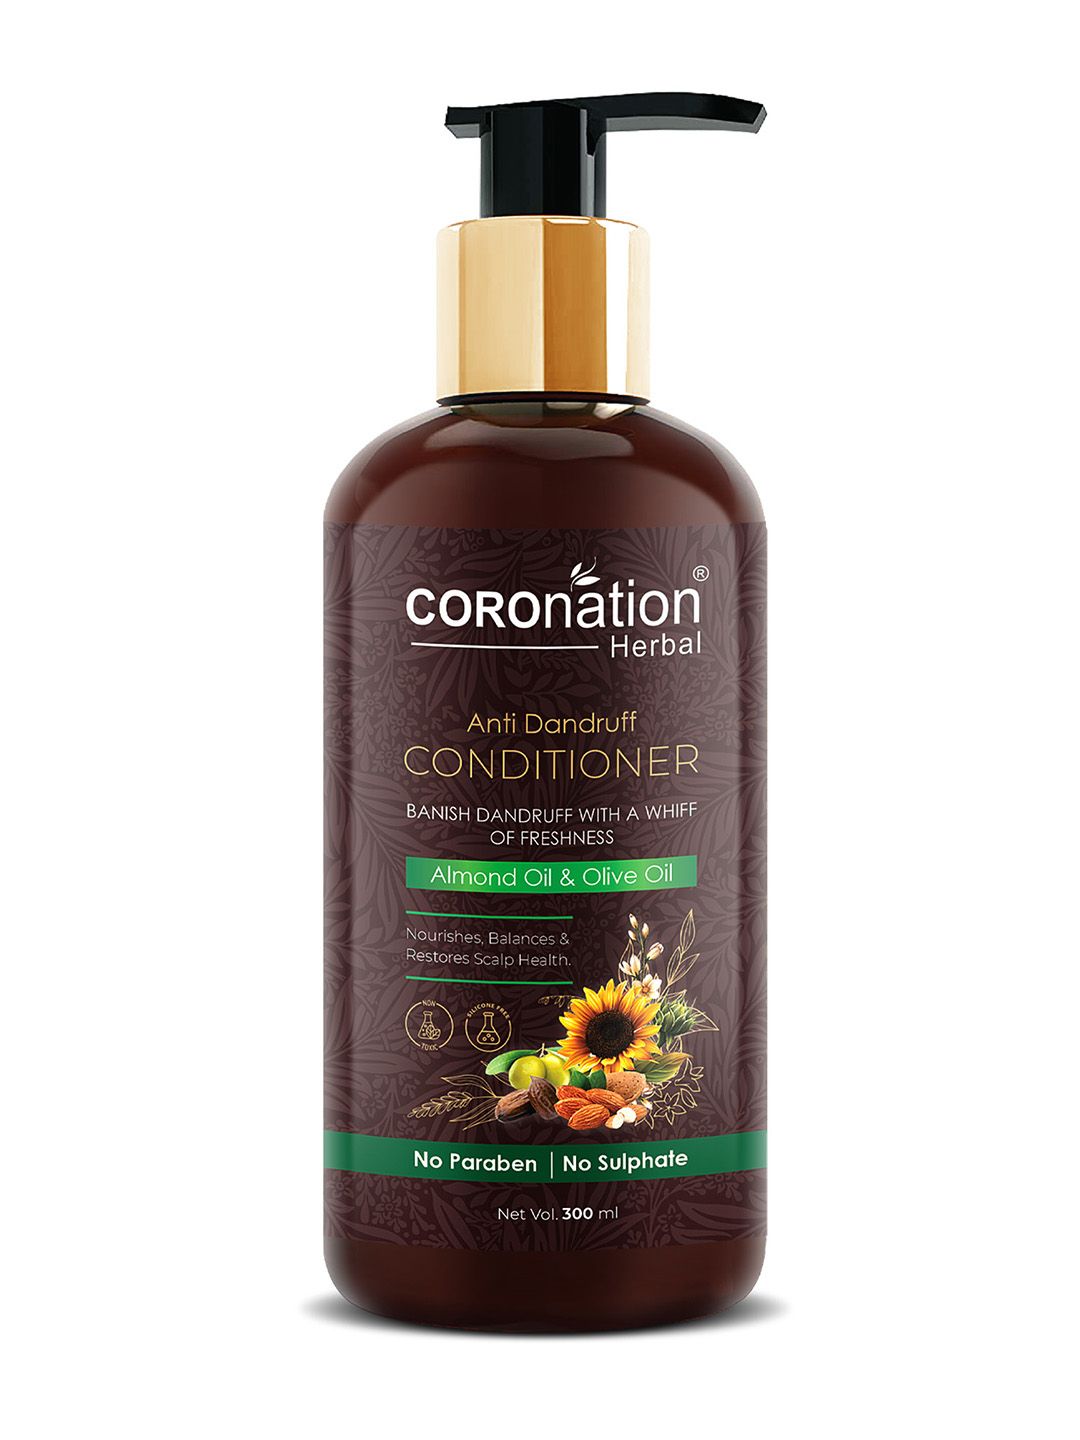 COROnation Herbal Anti Dandruff Conditioner with Almond Oil & Olive Oil 300 ml Price in India